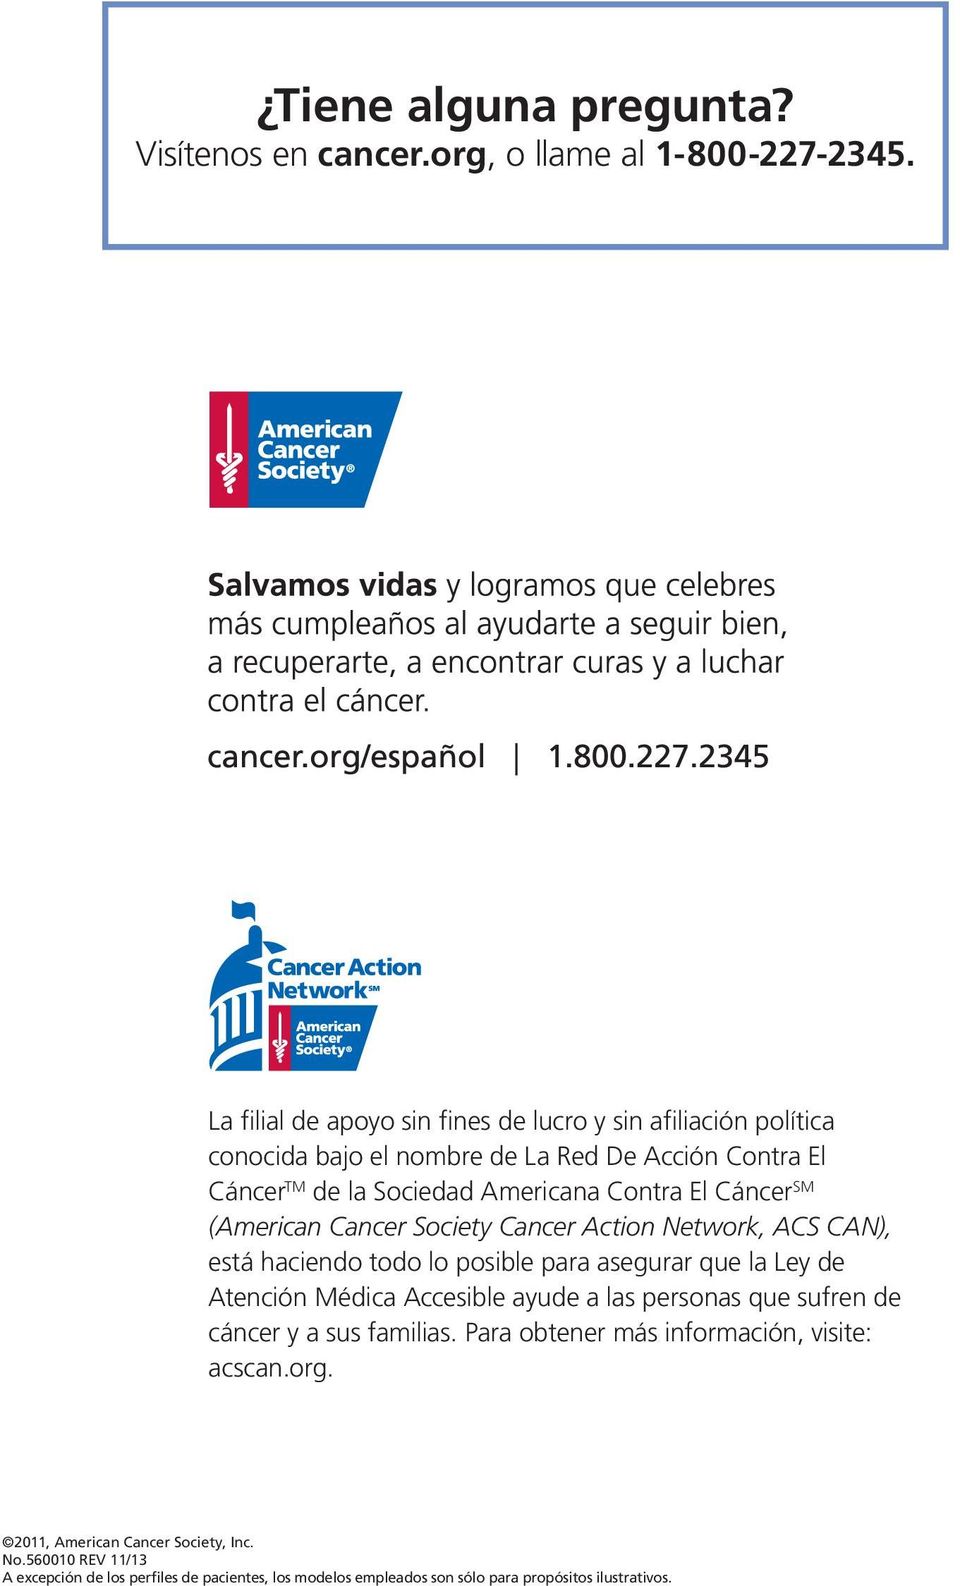 Cáncer SM (American Cancer Society Cancer Action Network, ACS CAN), está haciendo todo lo posible para asegurar que la Ley de Atención Médica Accesible ayude a las